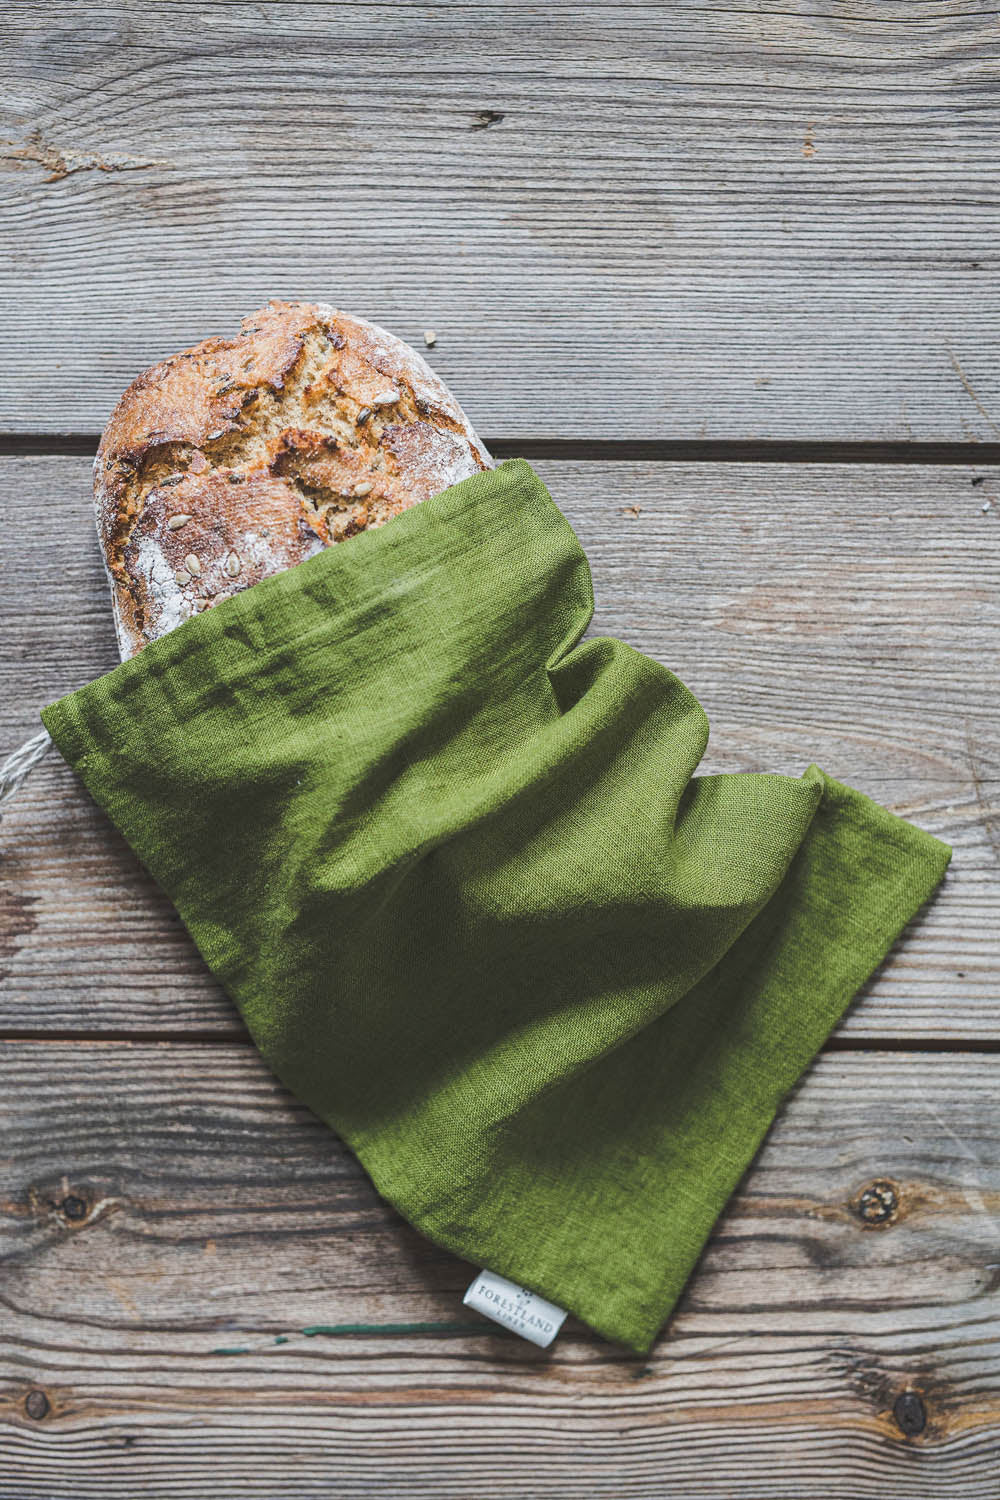 Linen bread bag in various colors